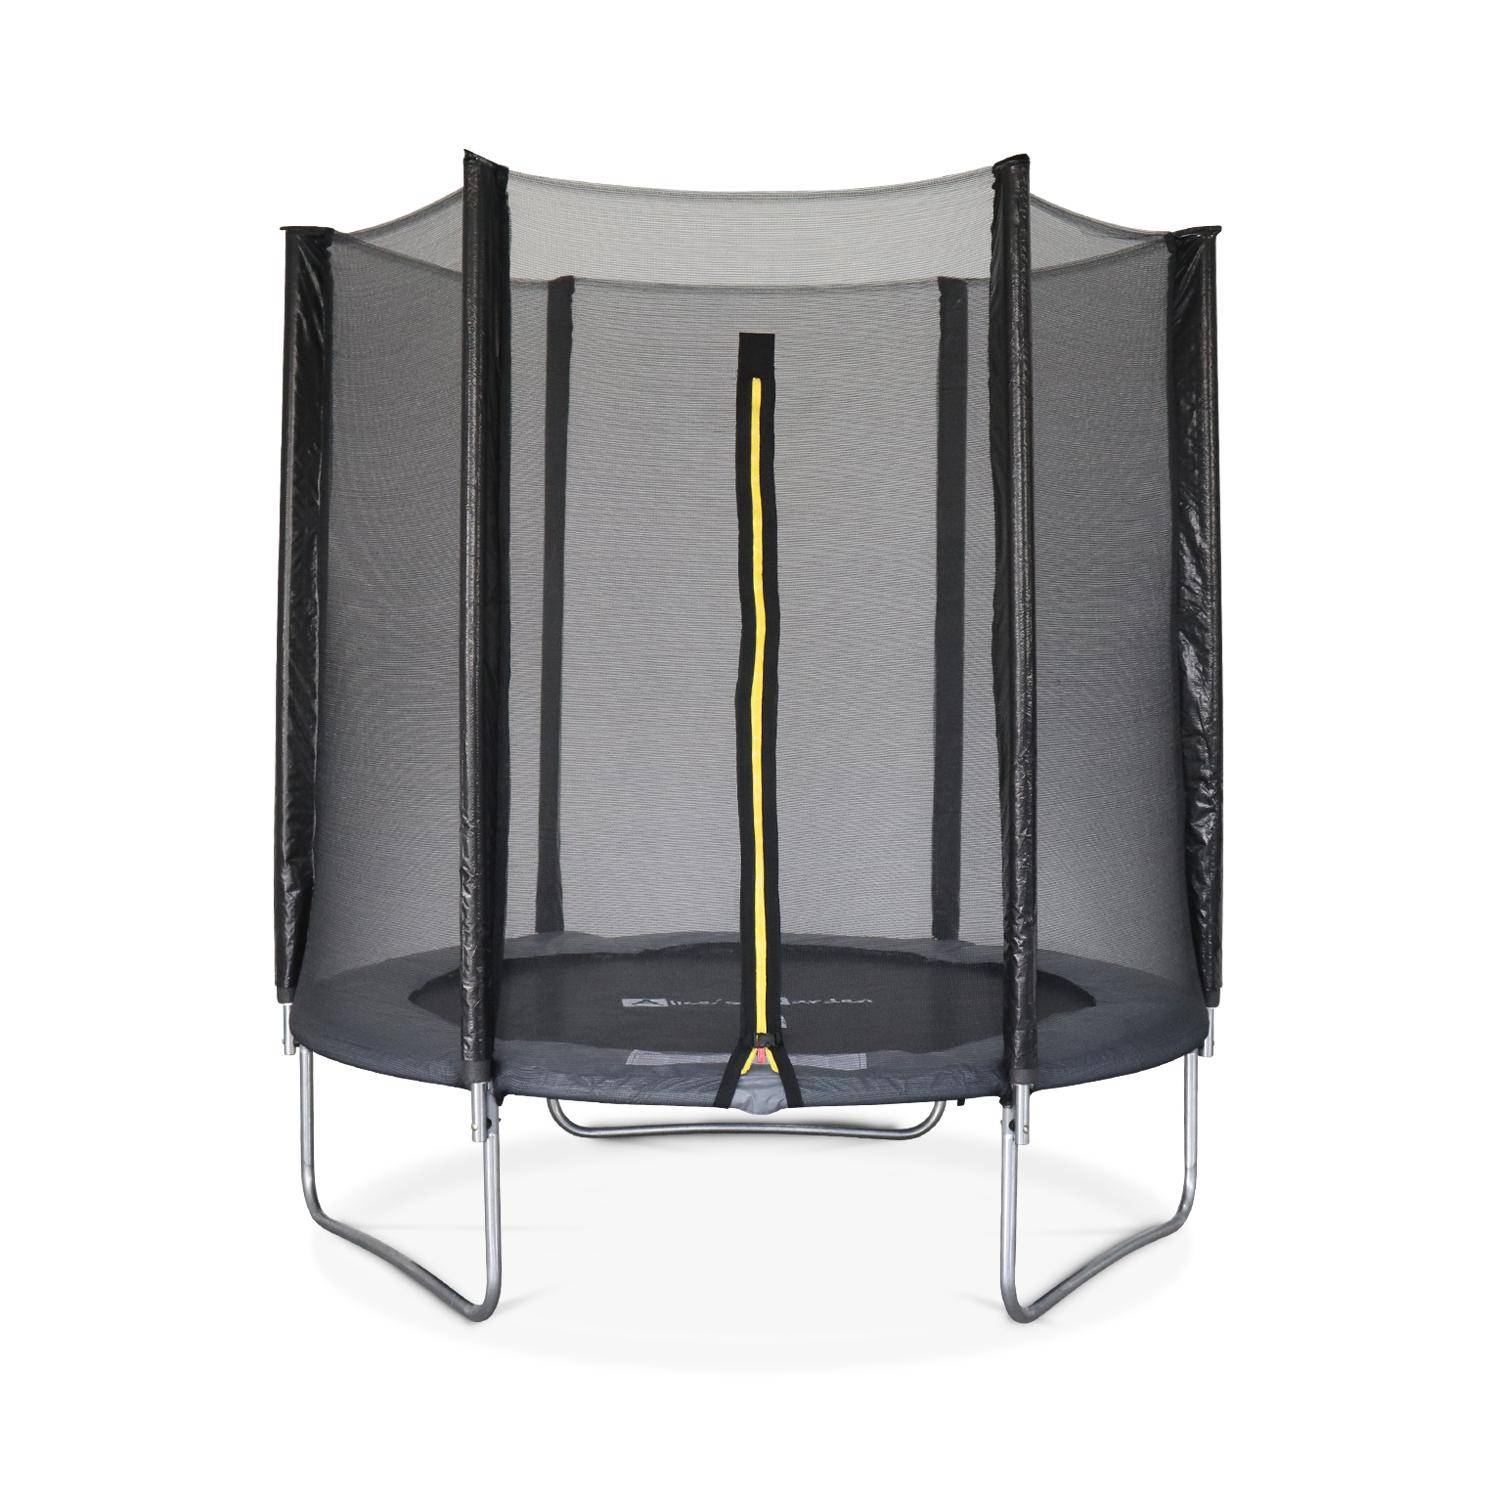 Round trampoline Ø 180cm grey with its protective net - Cassiopée - Garden  trampoline 2m| PRO quality | EU standards.